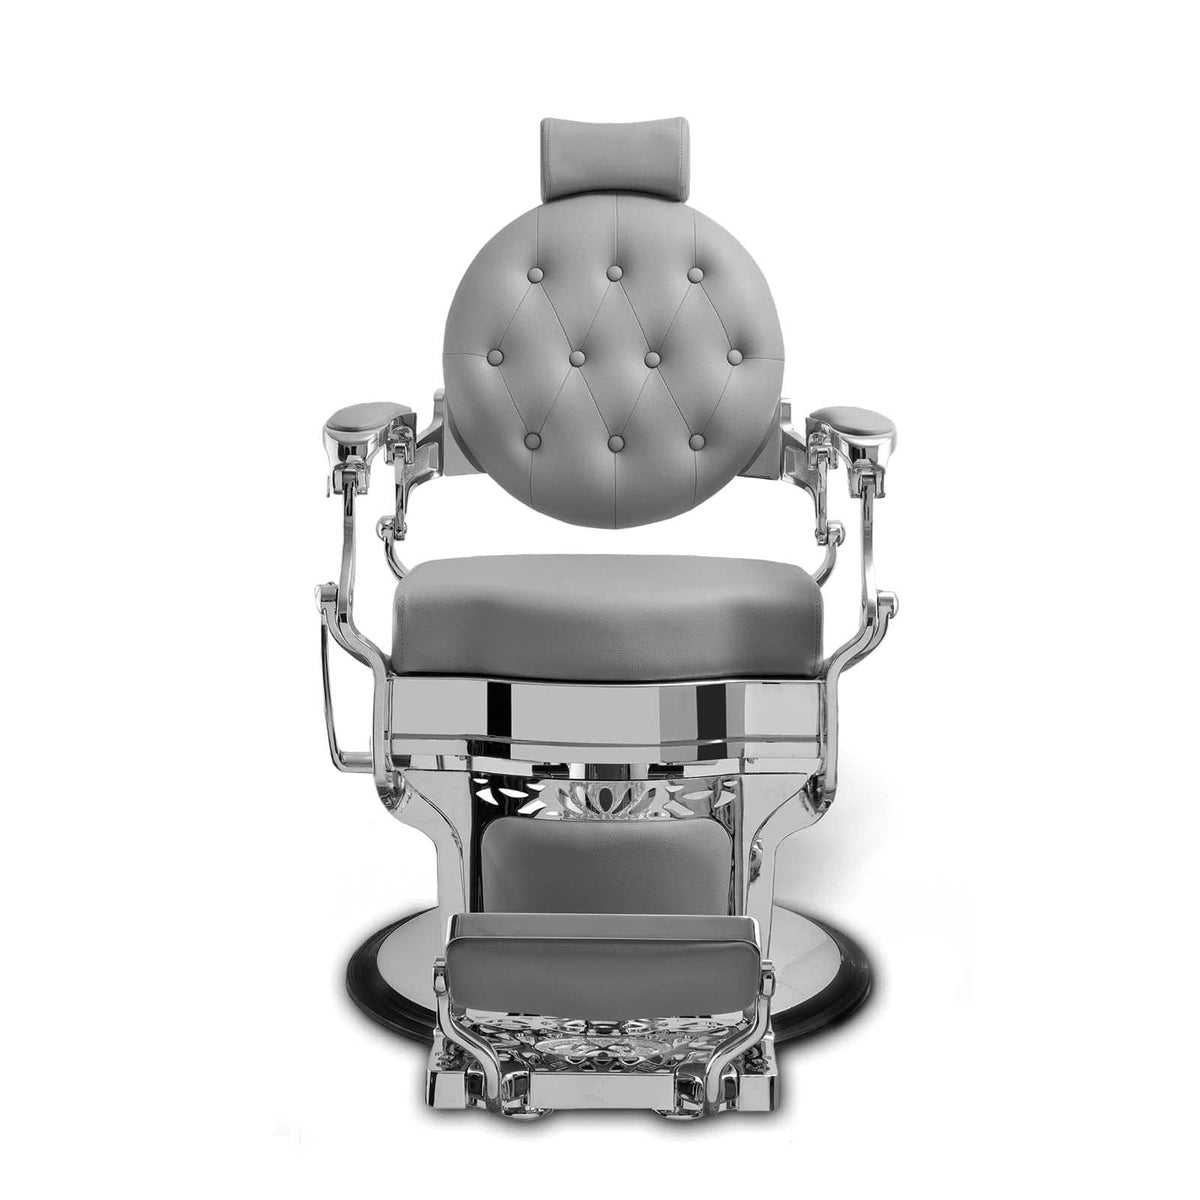 Truman Barber Chair